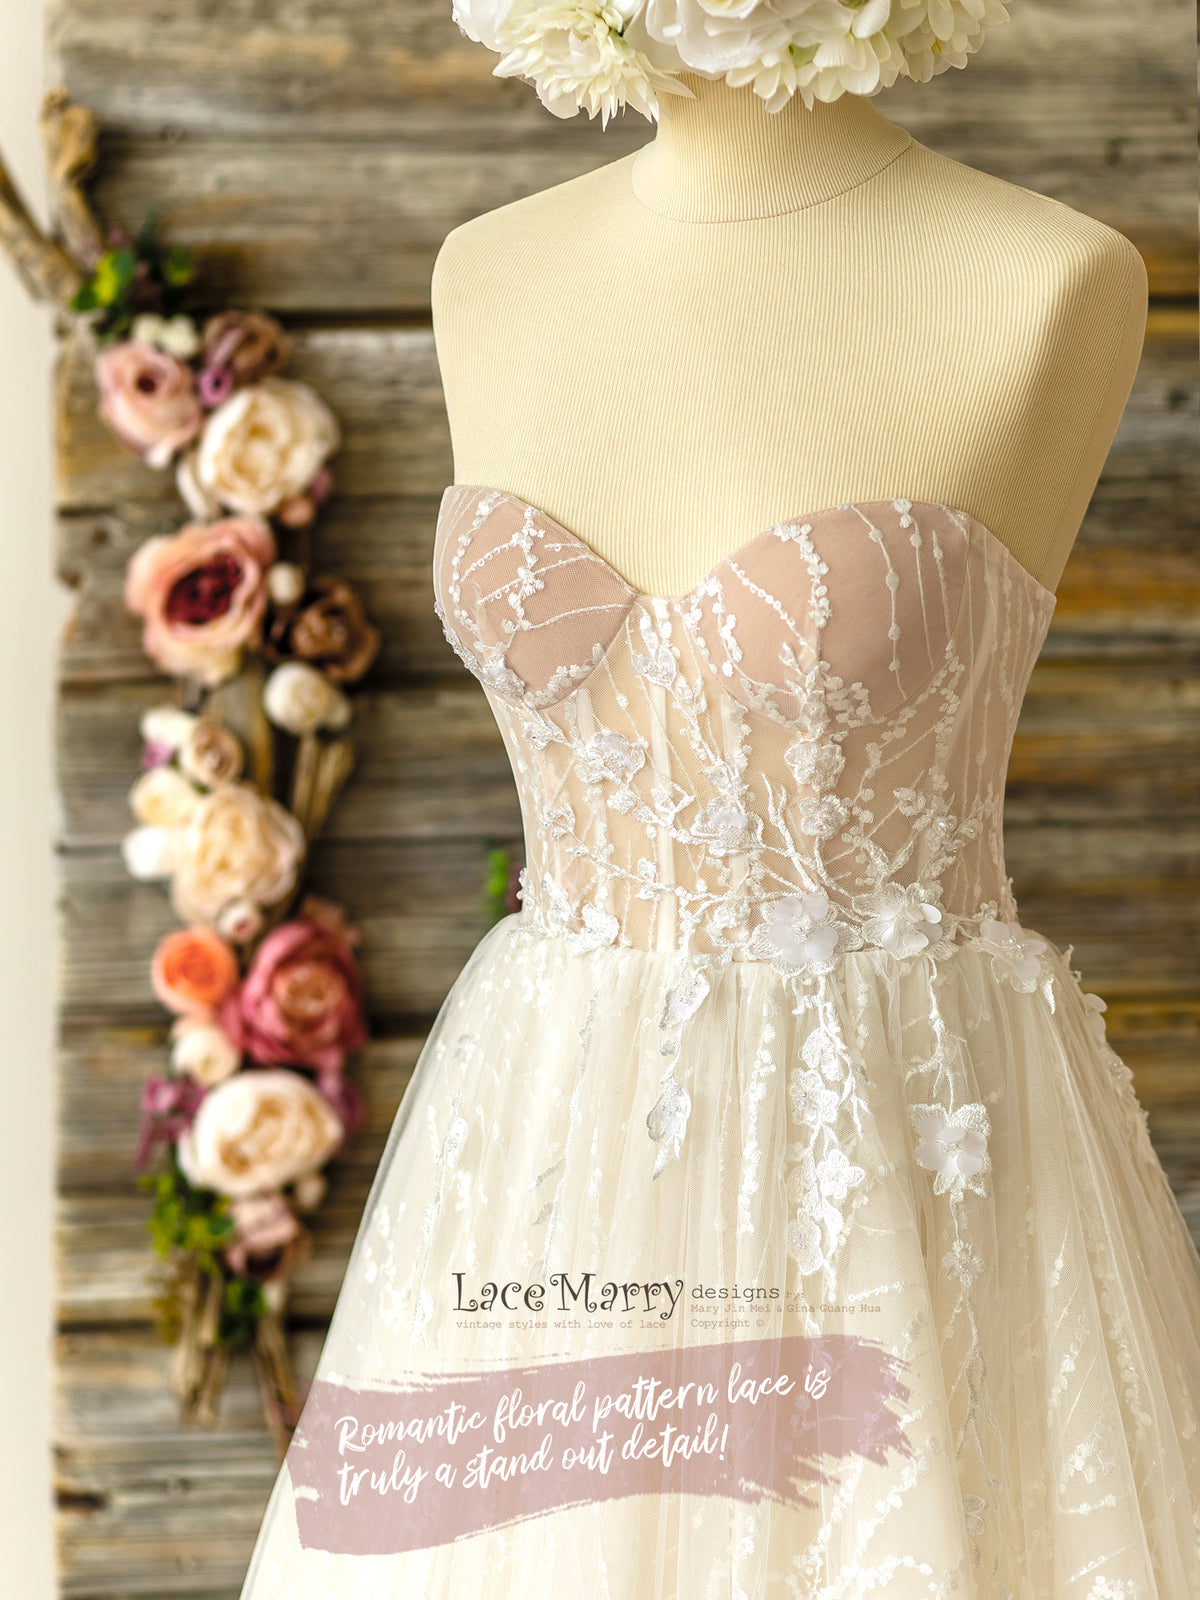 Sexy Strapless Bustier Neckline A Line Wedding Dress - LaceMarry